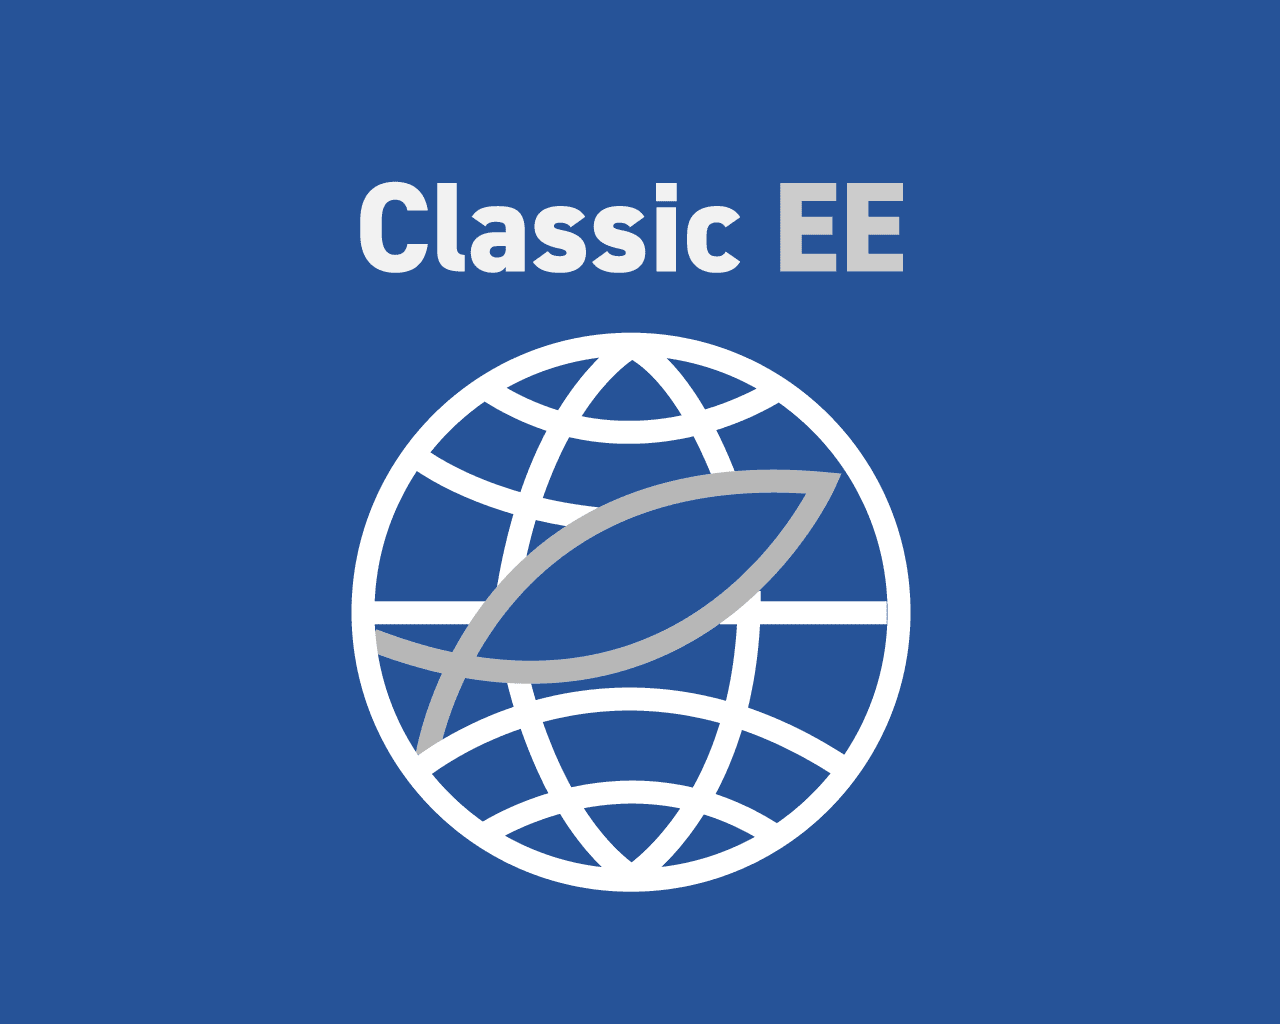 Classic EE (Adult EE)